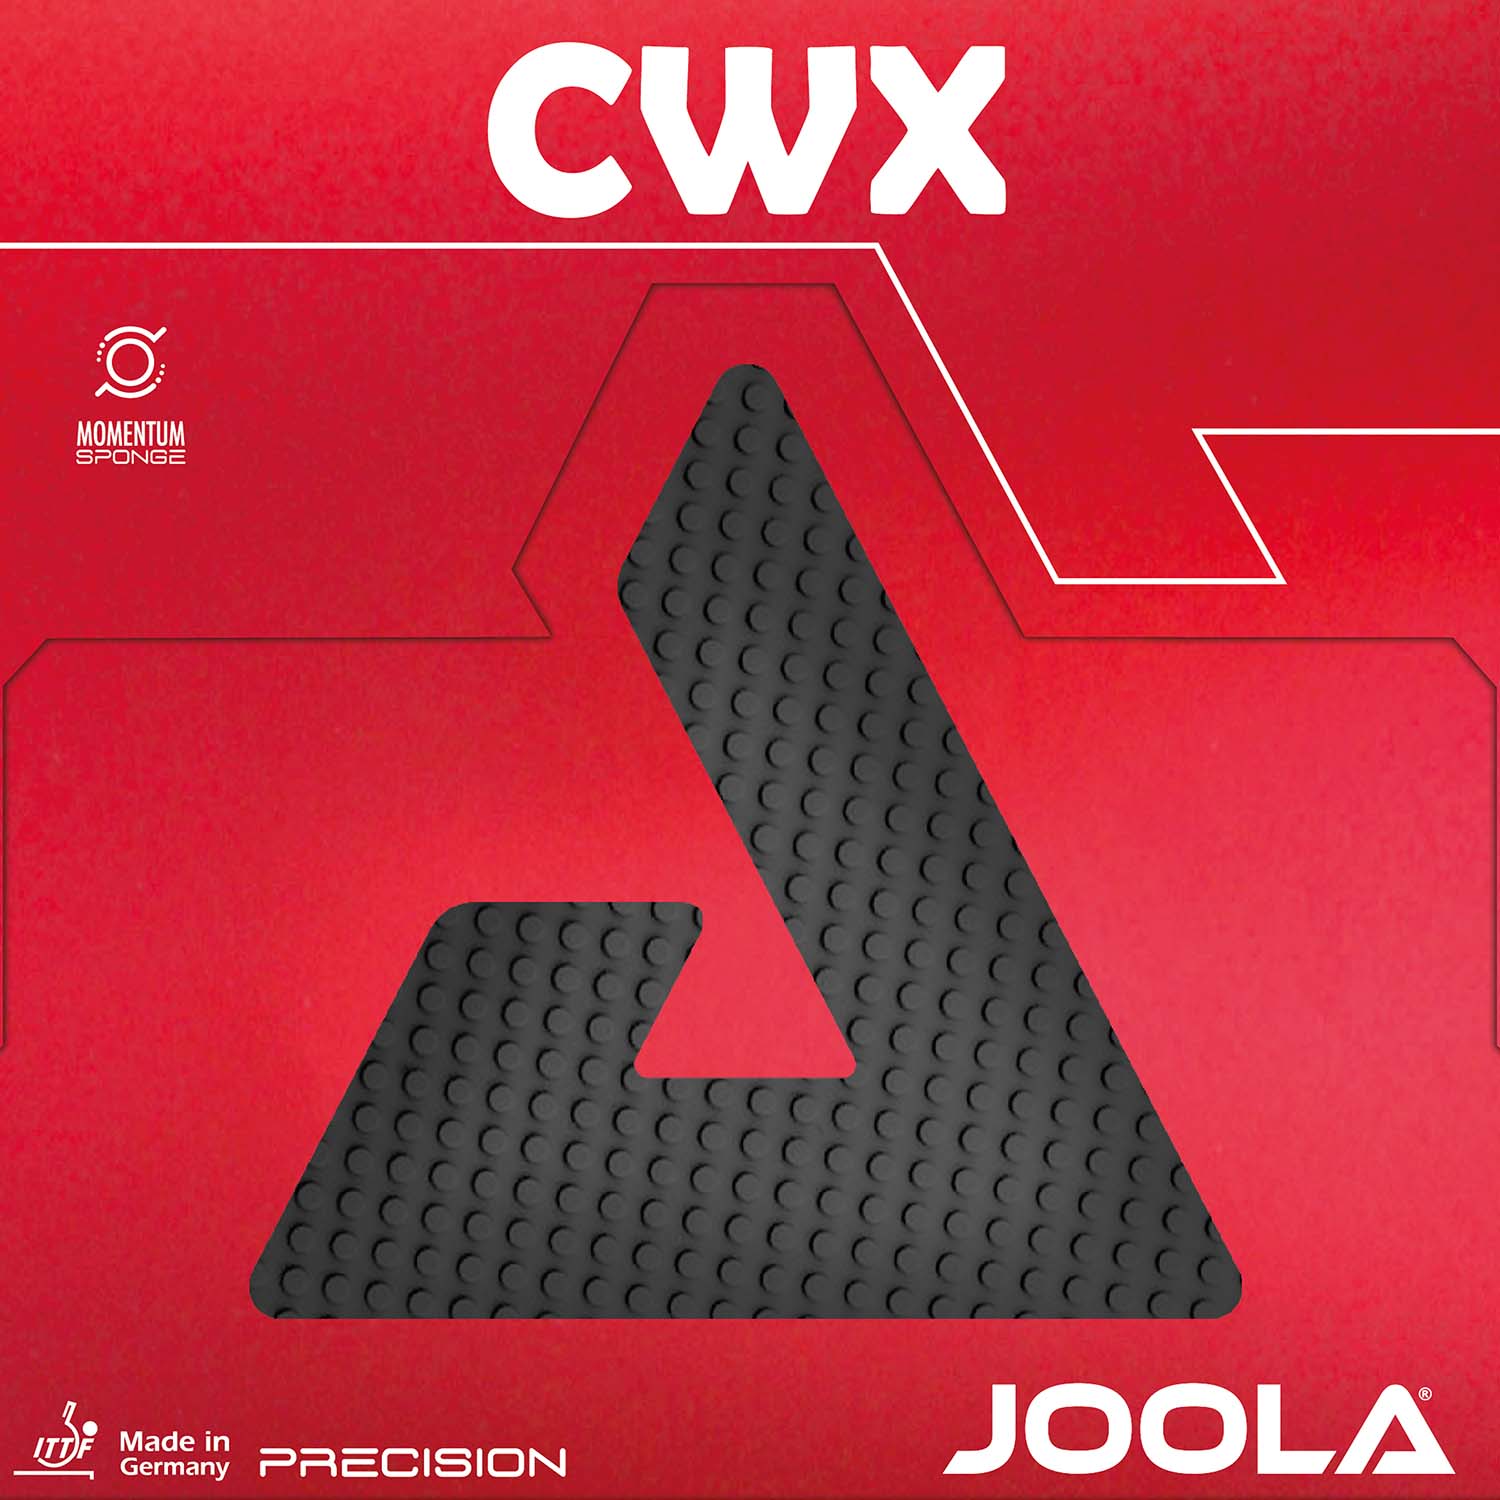 Joola CWX - Killypong